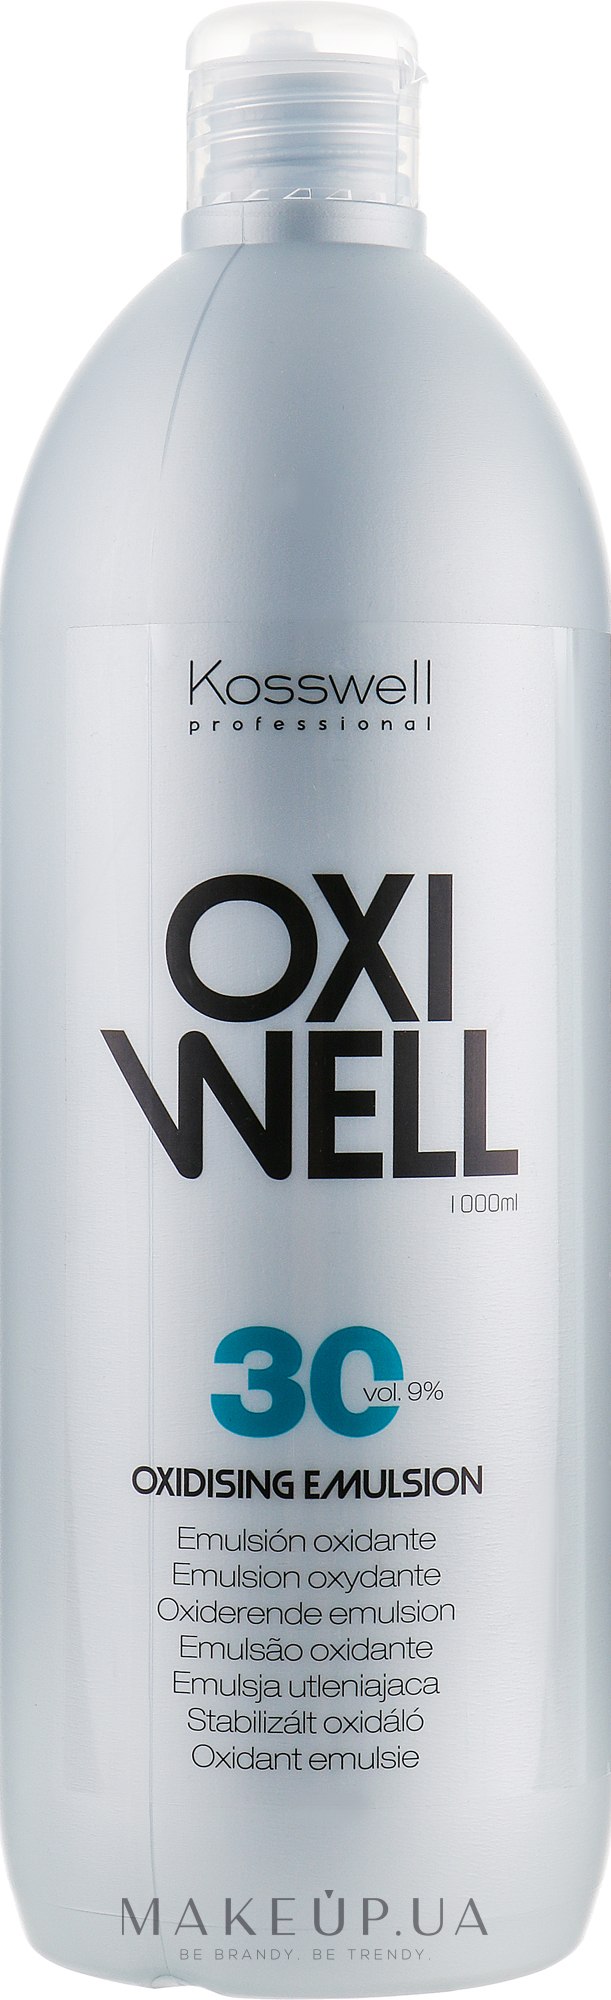 Окислювальна емульсія, 9% - Kosswell Equium Oxidizing Emulsion Oxiwell 9% 30 vol — фото 1000ml